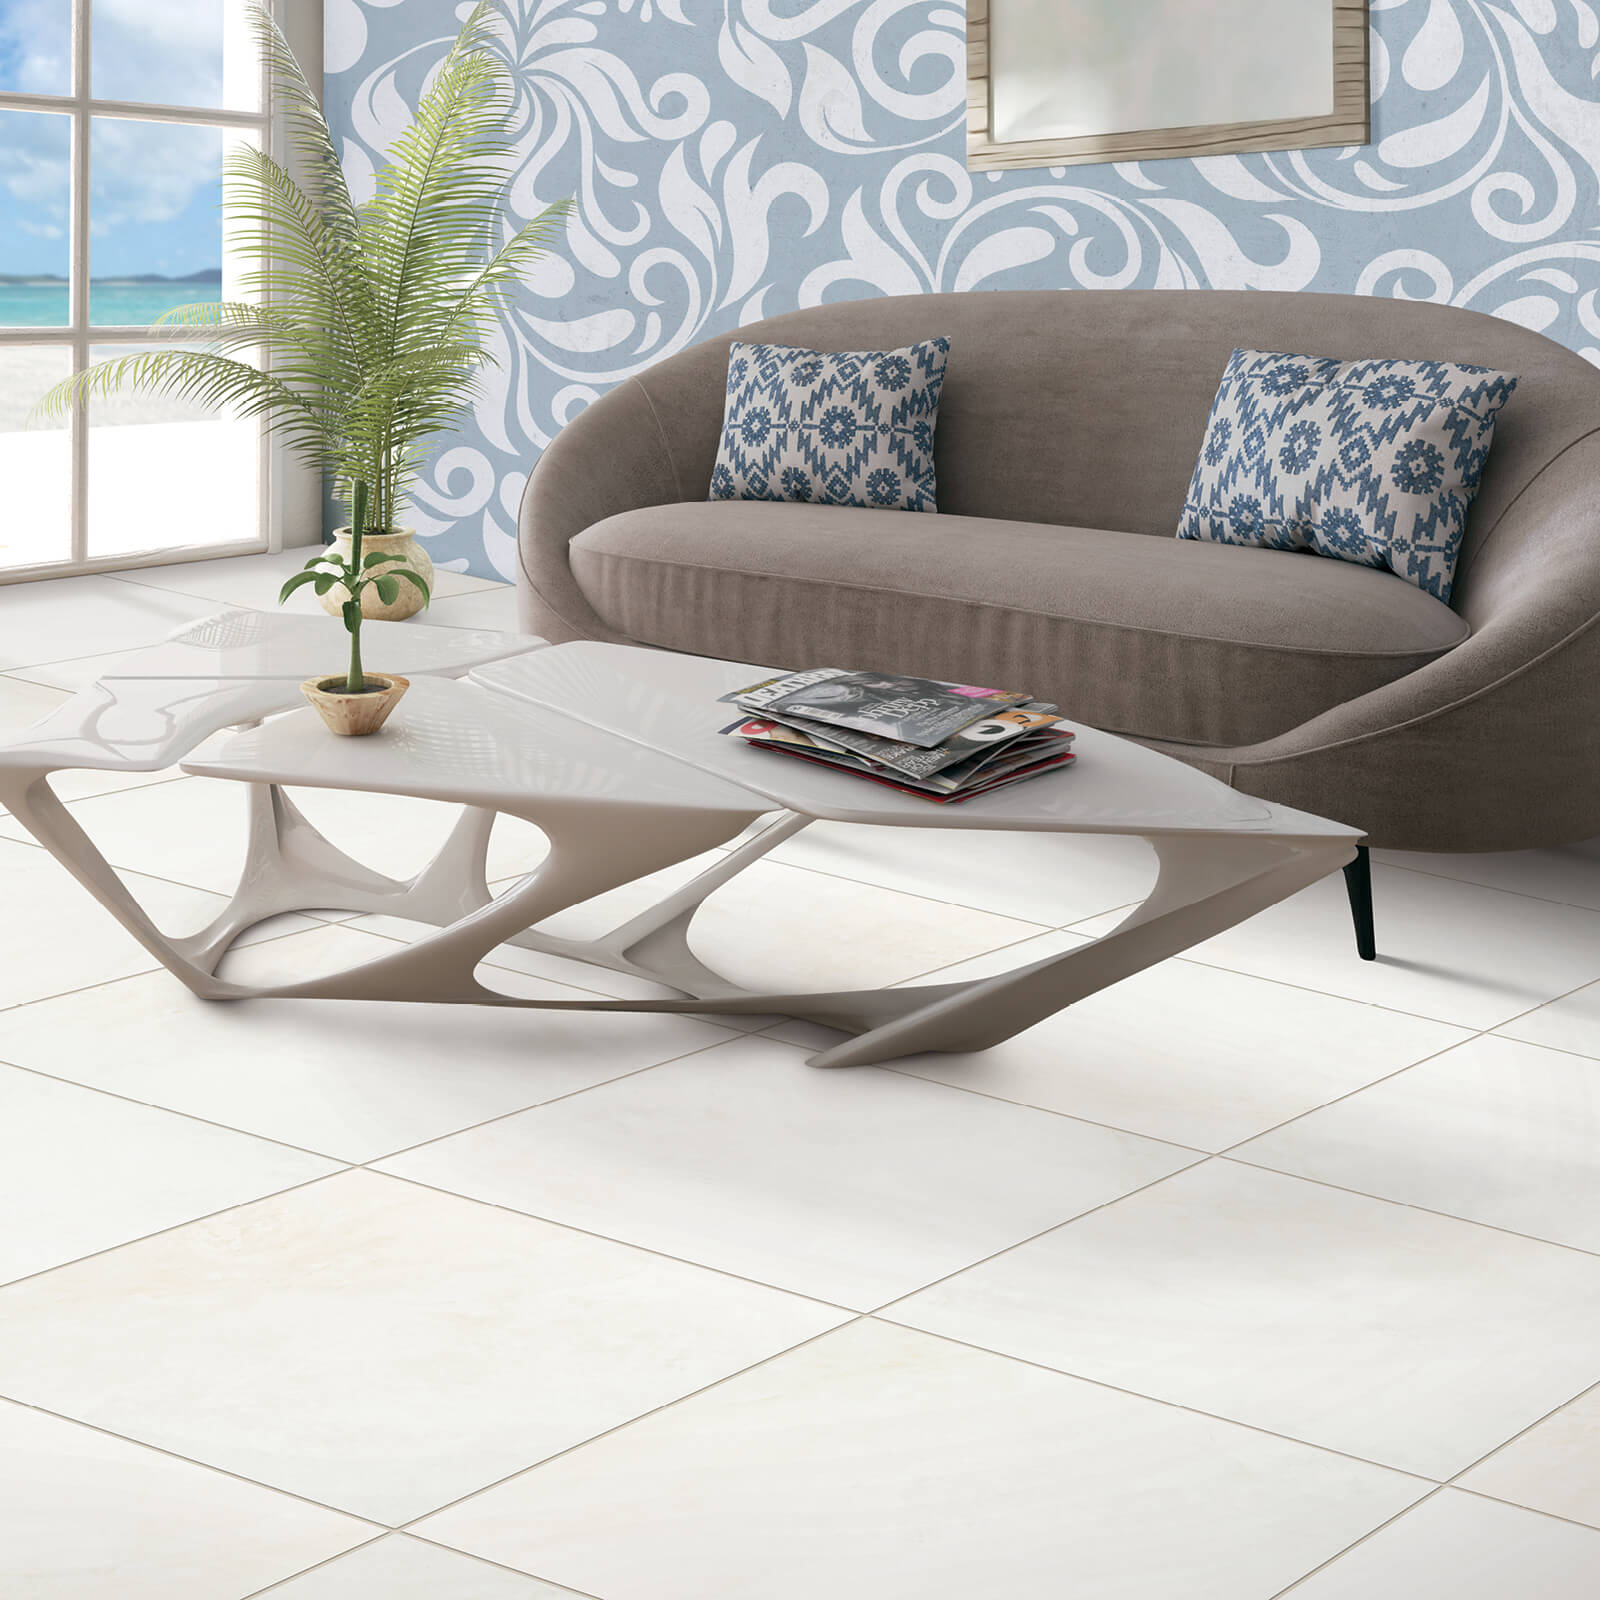 tile flooring in living room | Endwell Rug & Floor | Endicott and Oneonta, NY